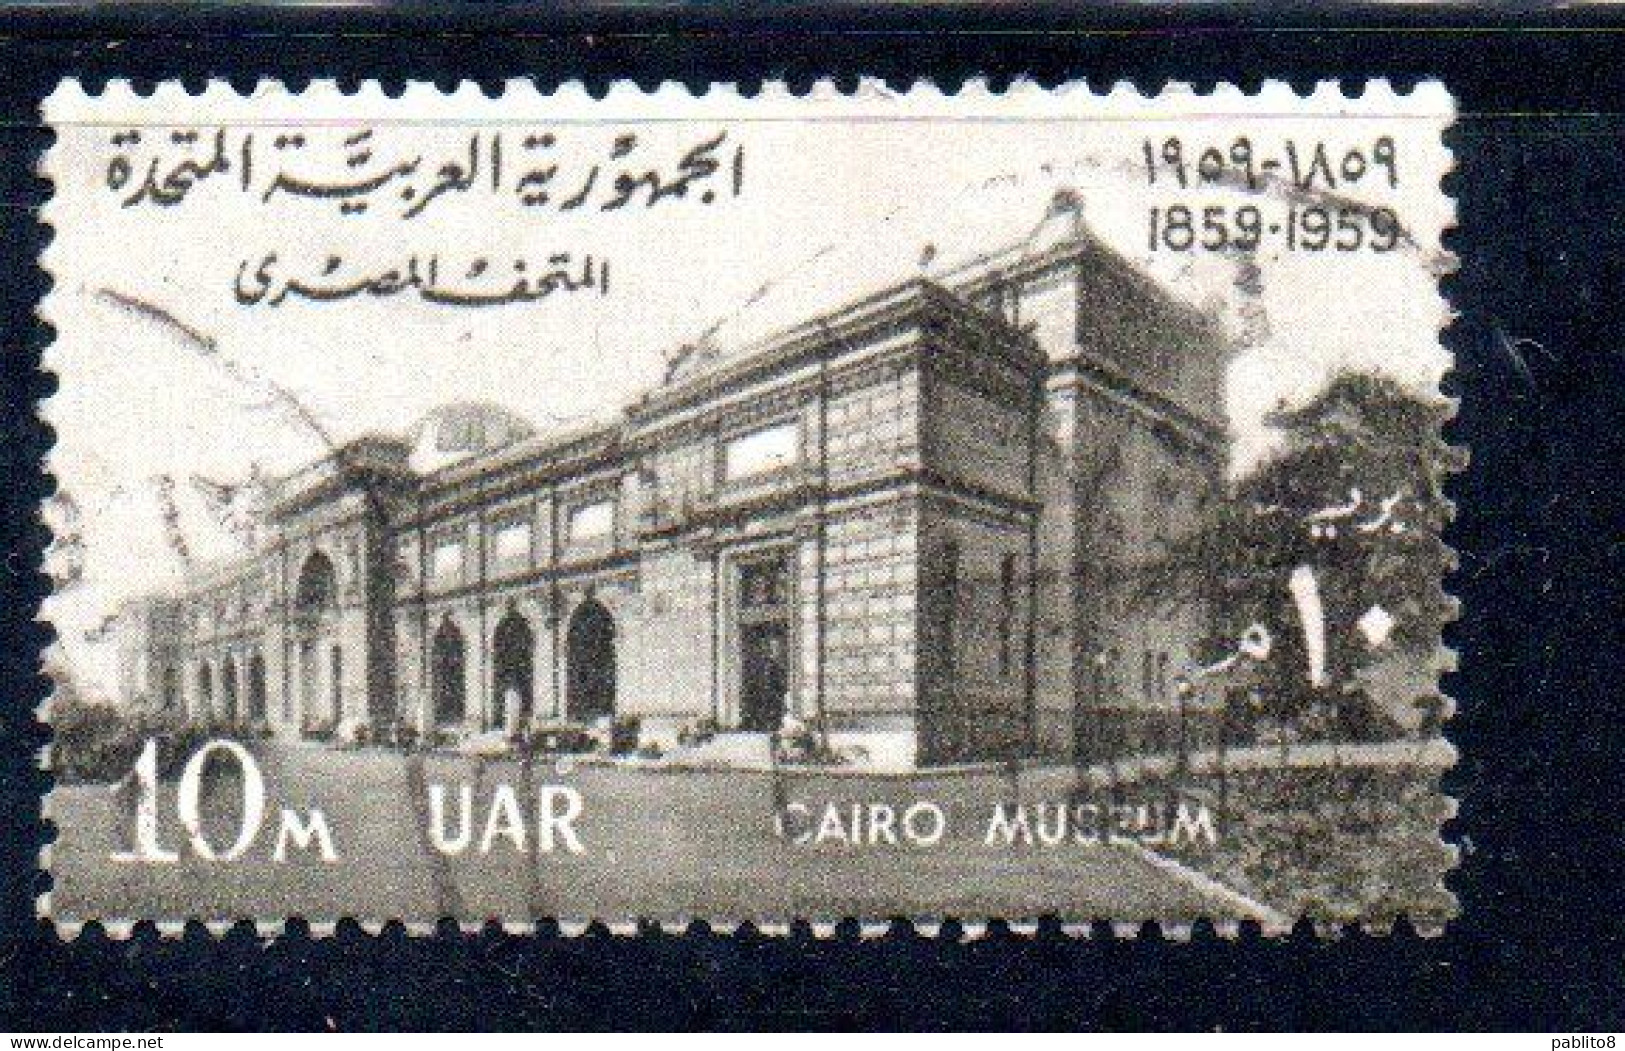 UAR EGYPT EGITTO 1959 CENTENARY OF CAIRO MUSEUM 10m USED USATO OBLITERE' - Usati